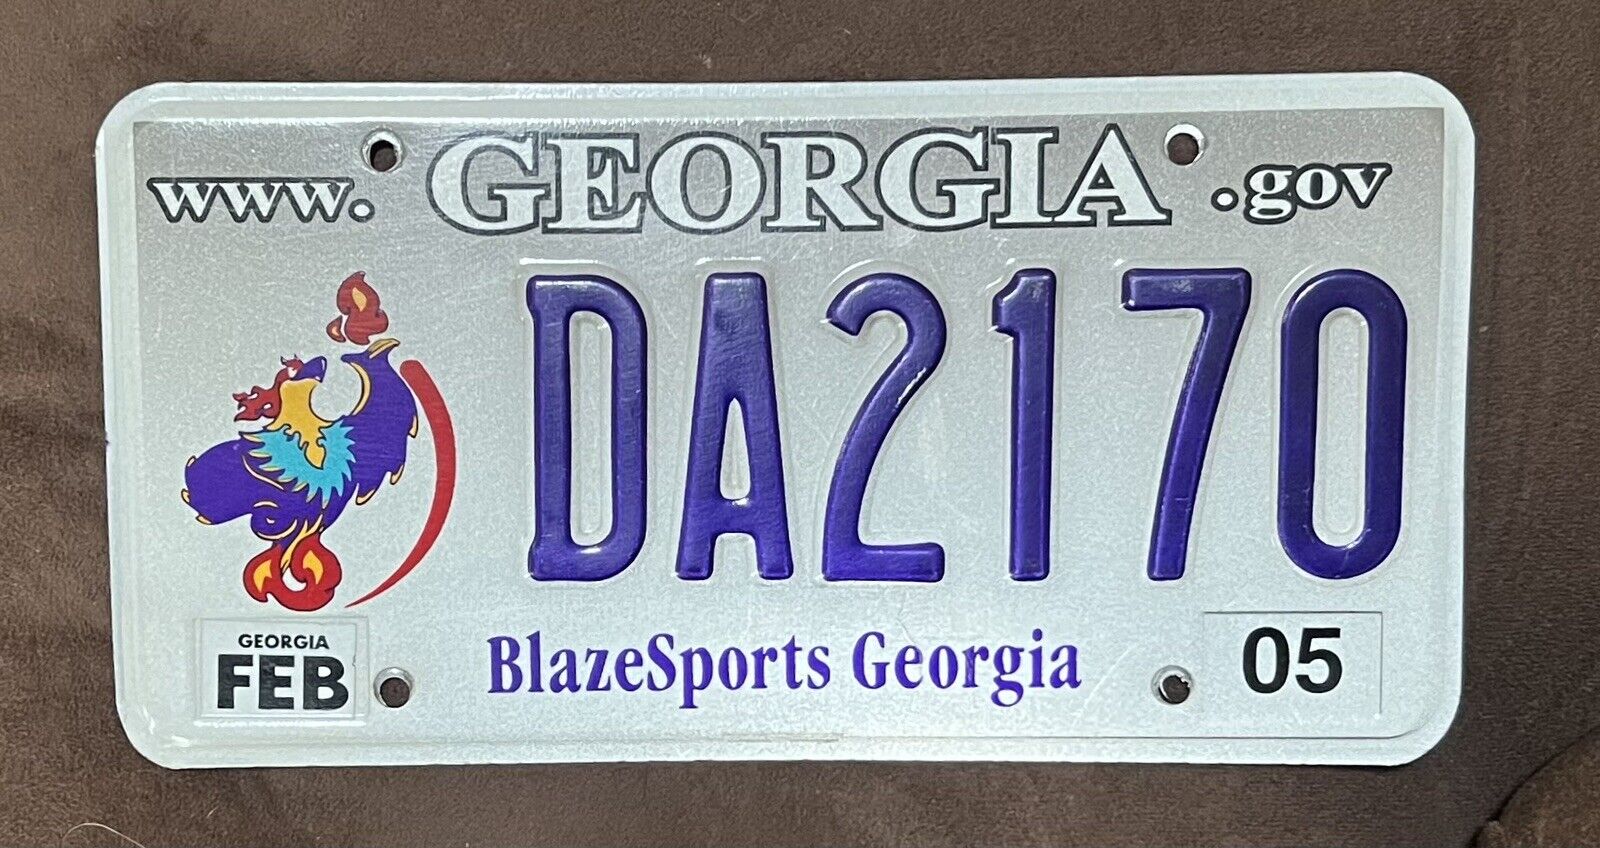 Georgia “Blaze Sports Georgia” License Plate